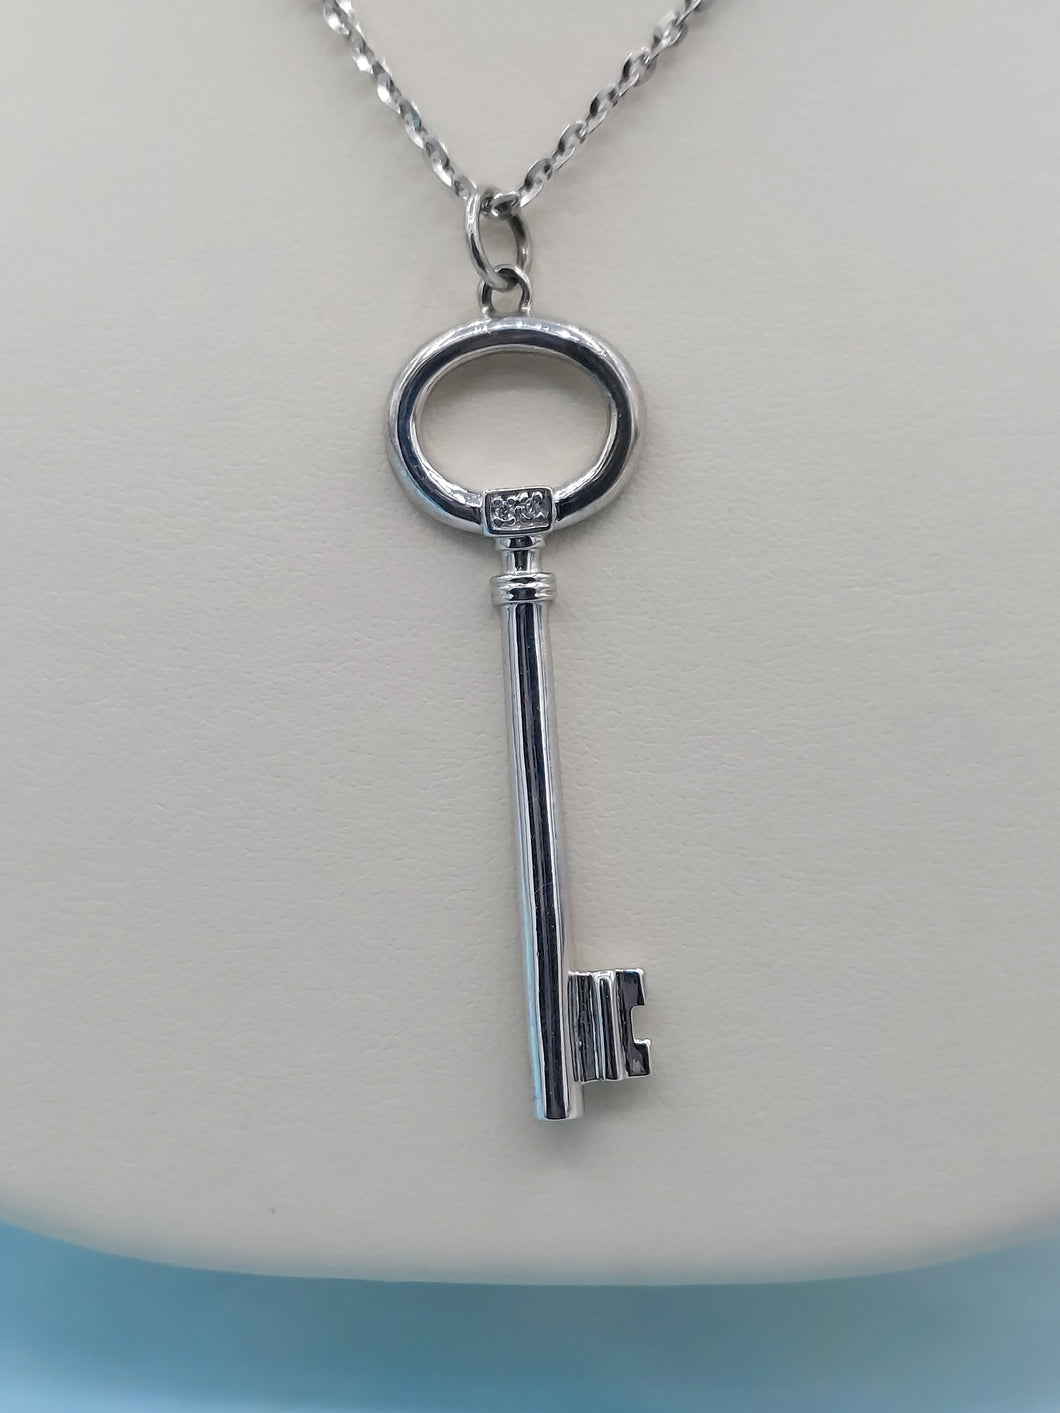 Skeleton Key pendant in sterling silver